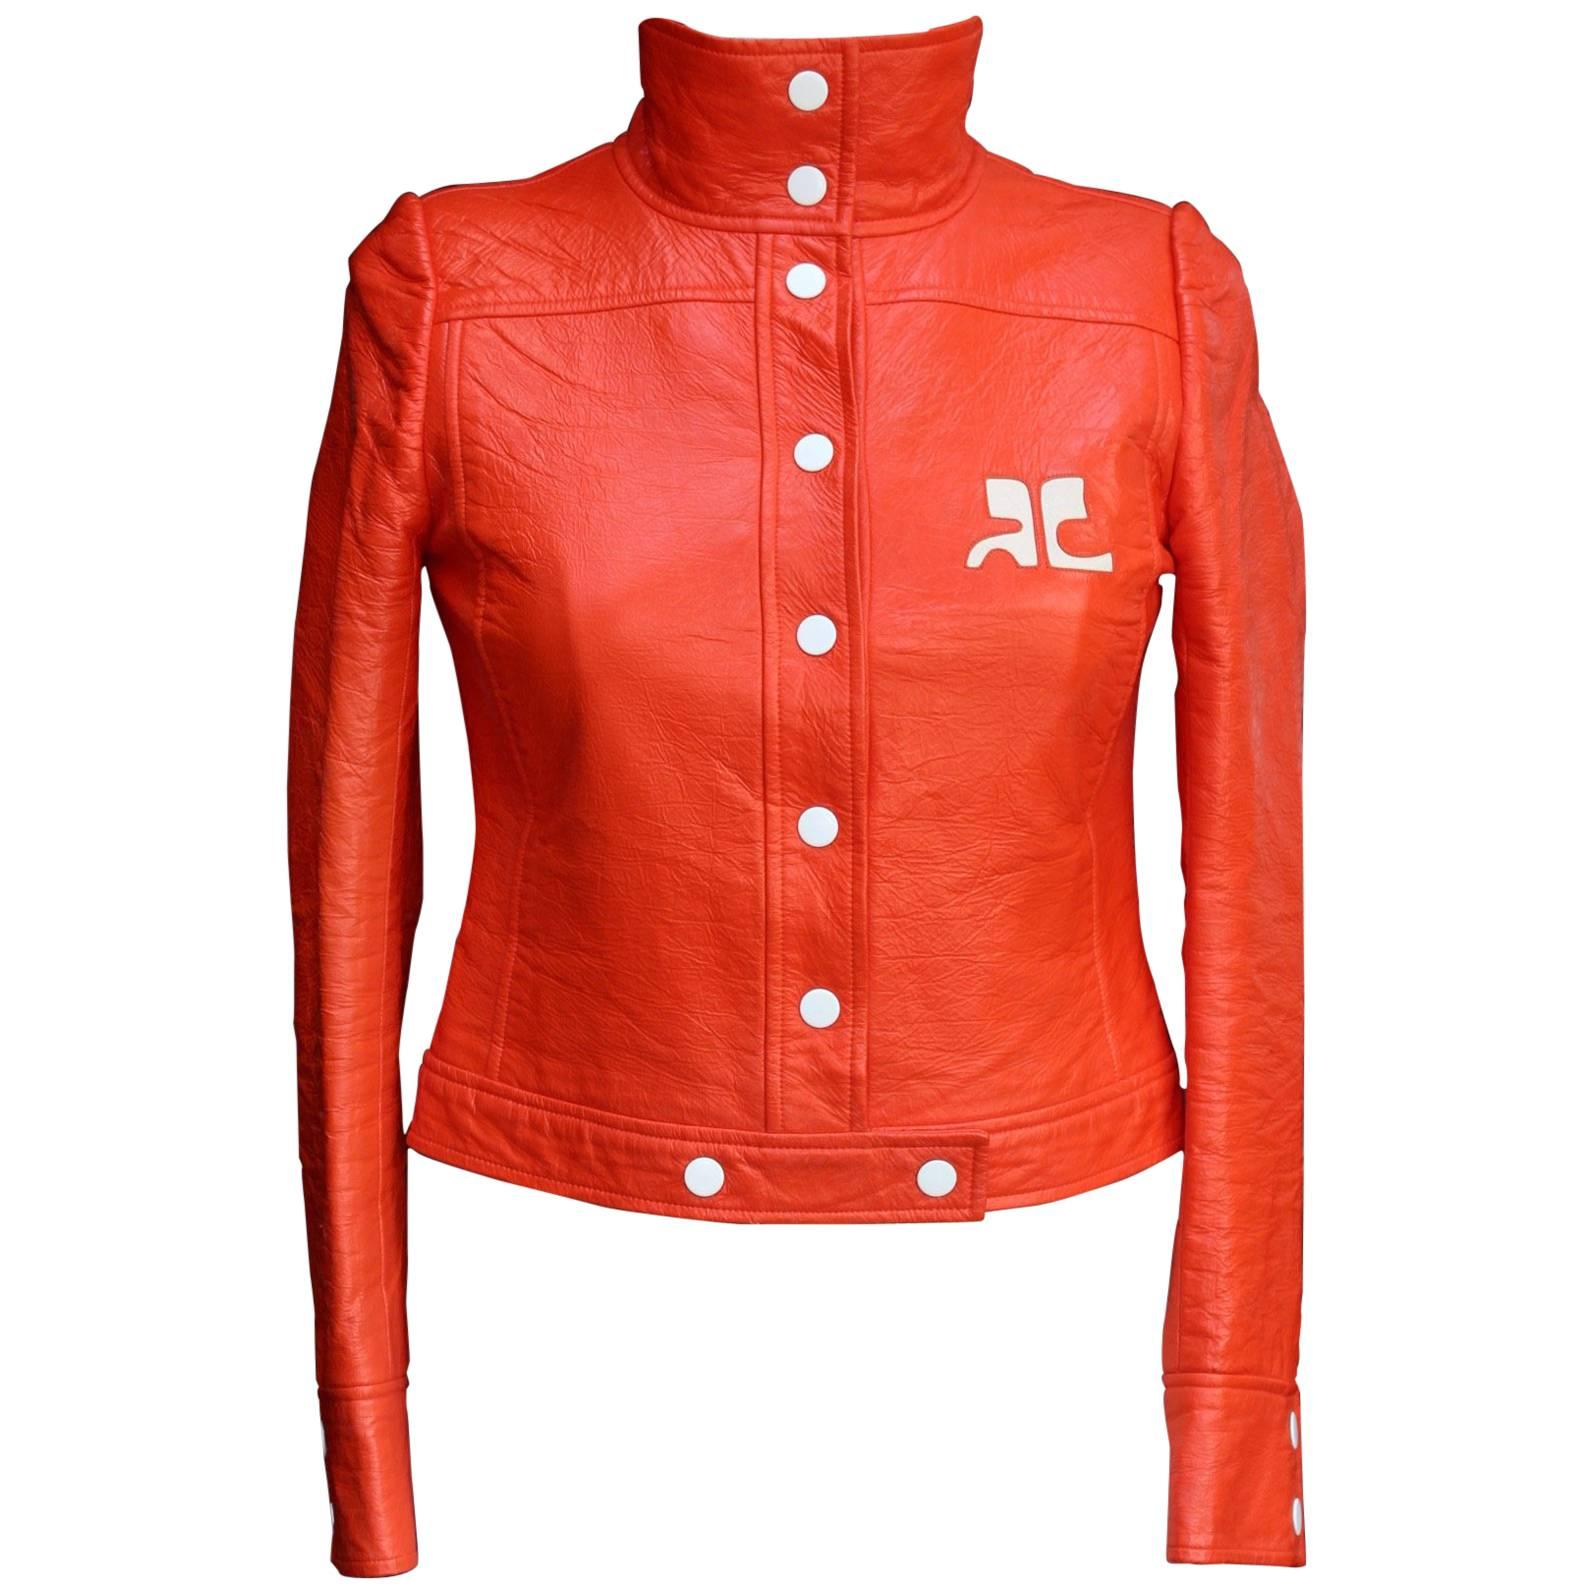 1970s, Courrèges iconic orange jacket